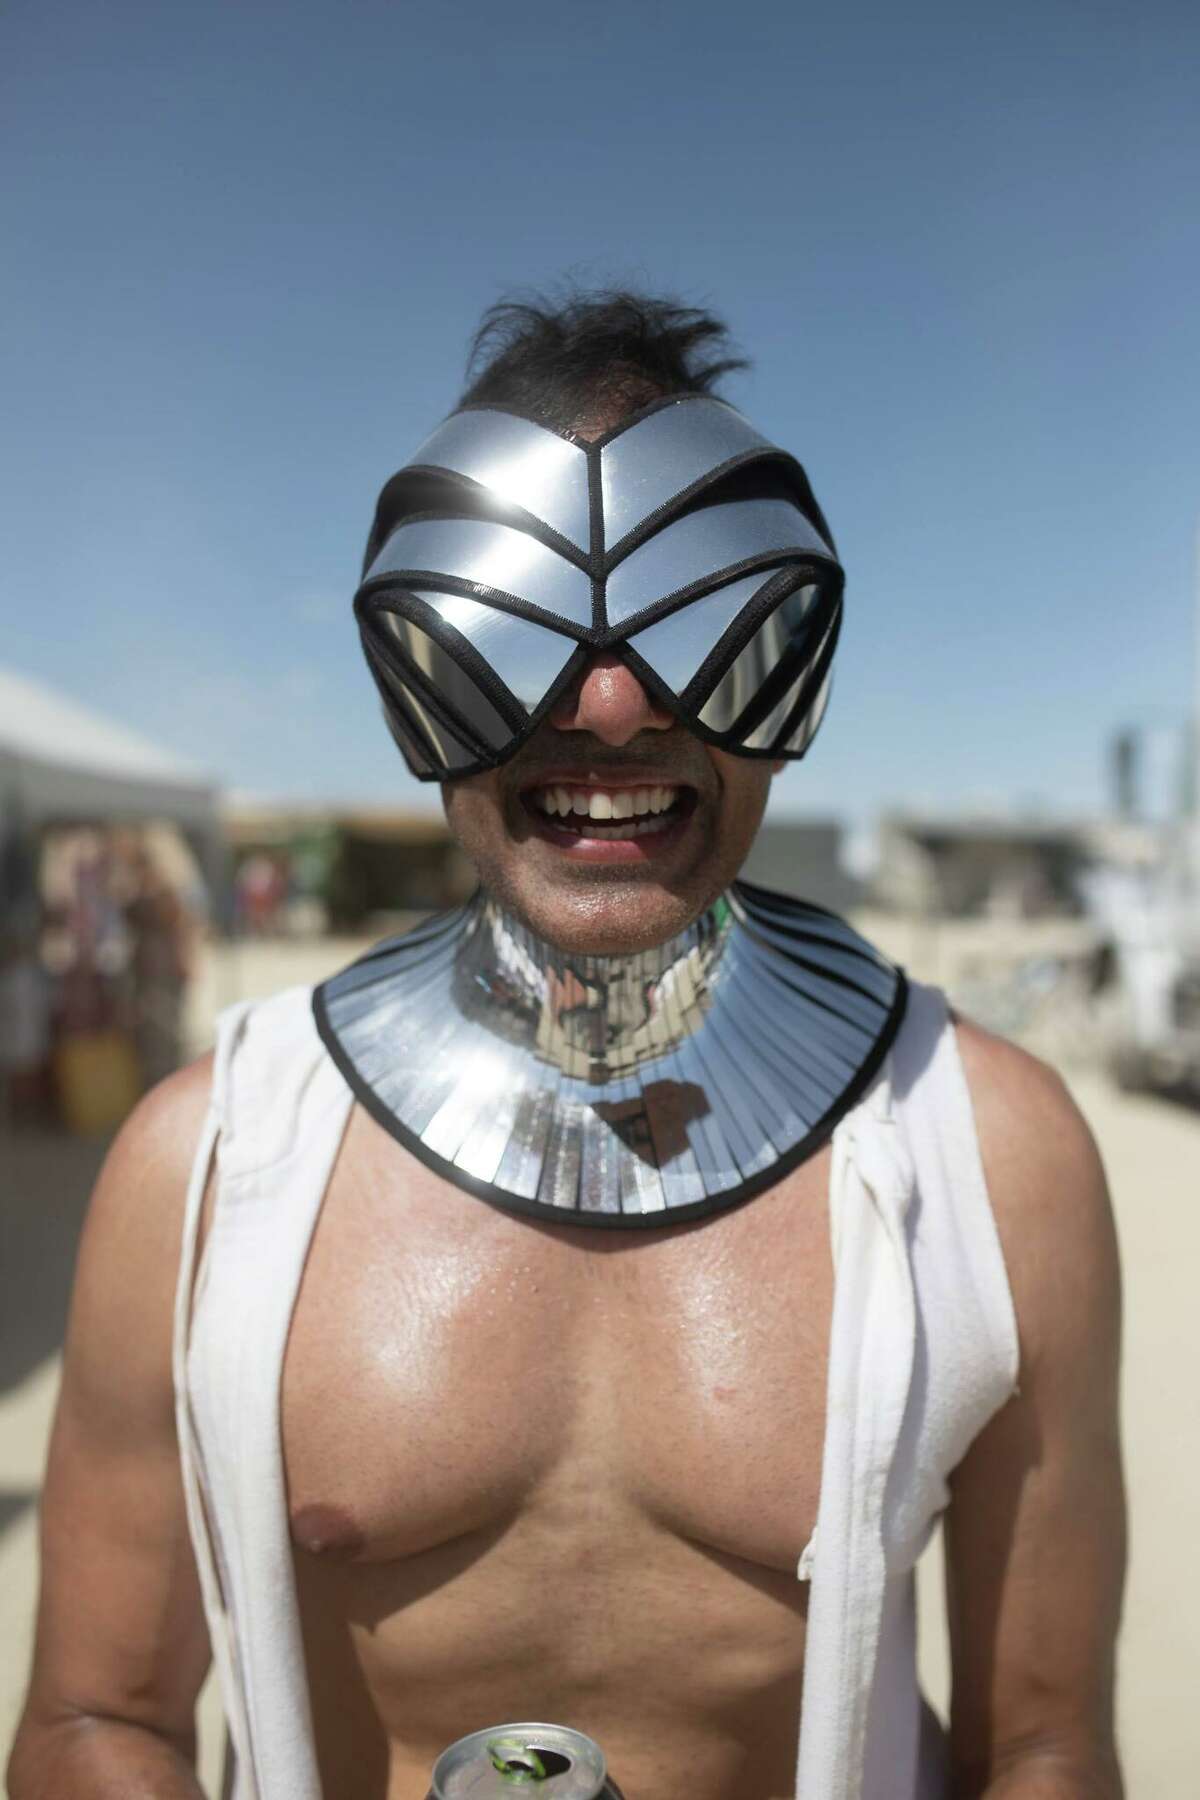 Sami Munir at Burning Man 2022 at the Black Rock Desert in Jerlak, Nevada.